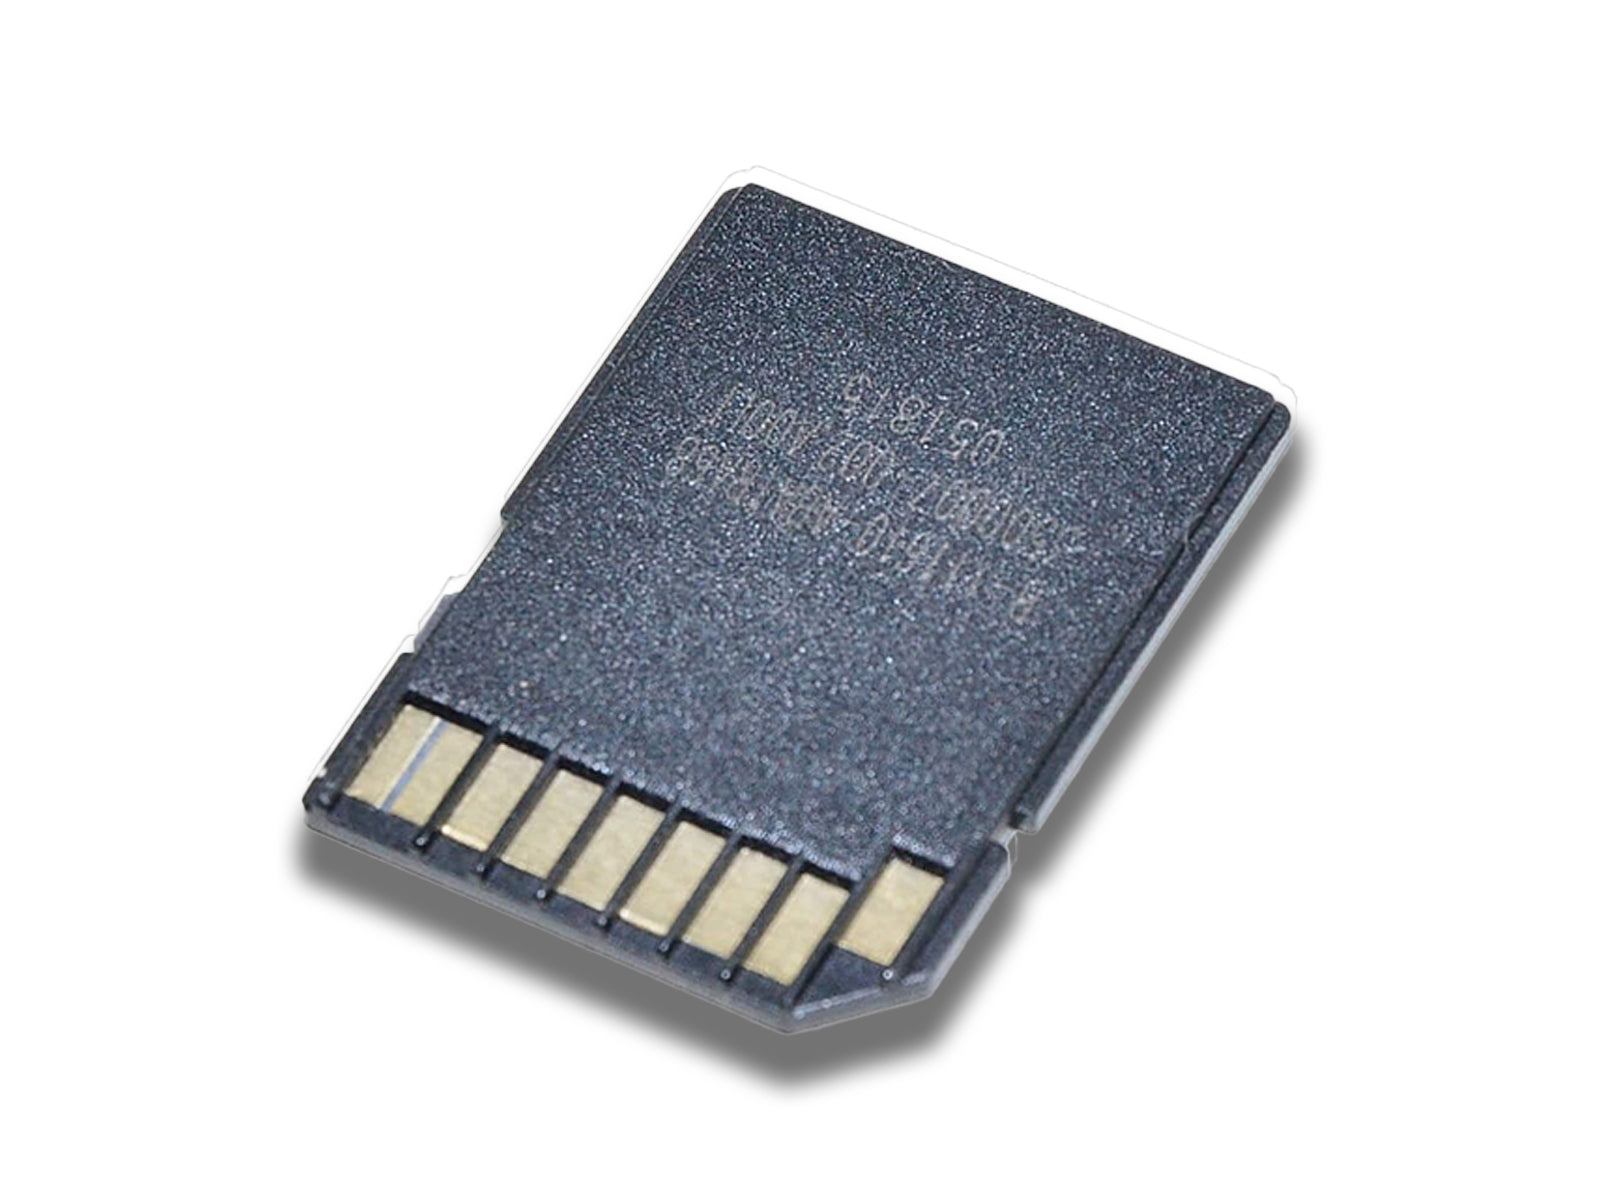 Micro Kingston 8gb Memory card Chip Side